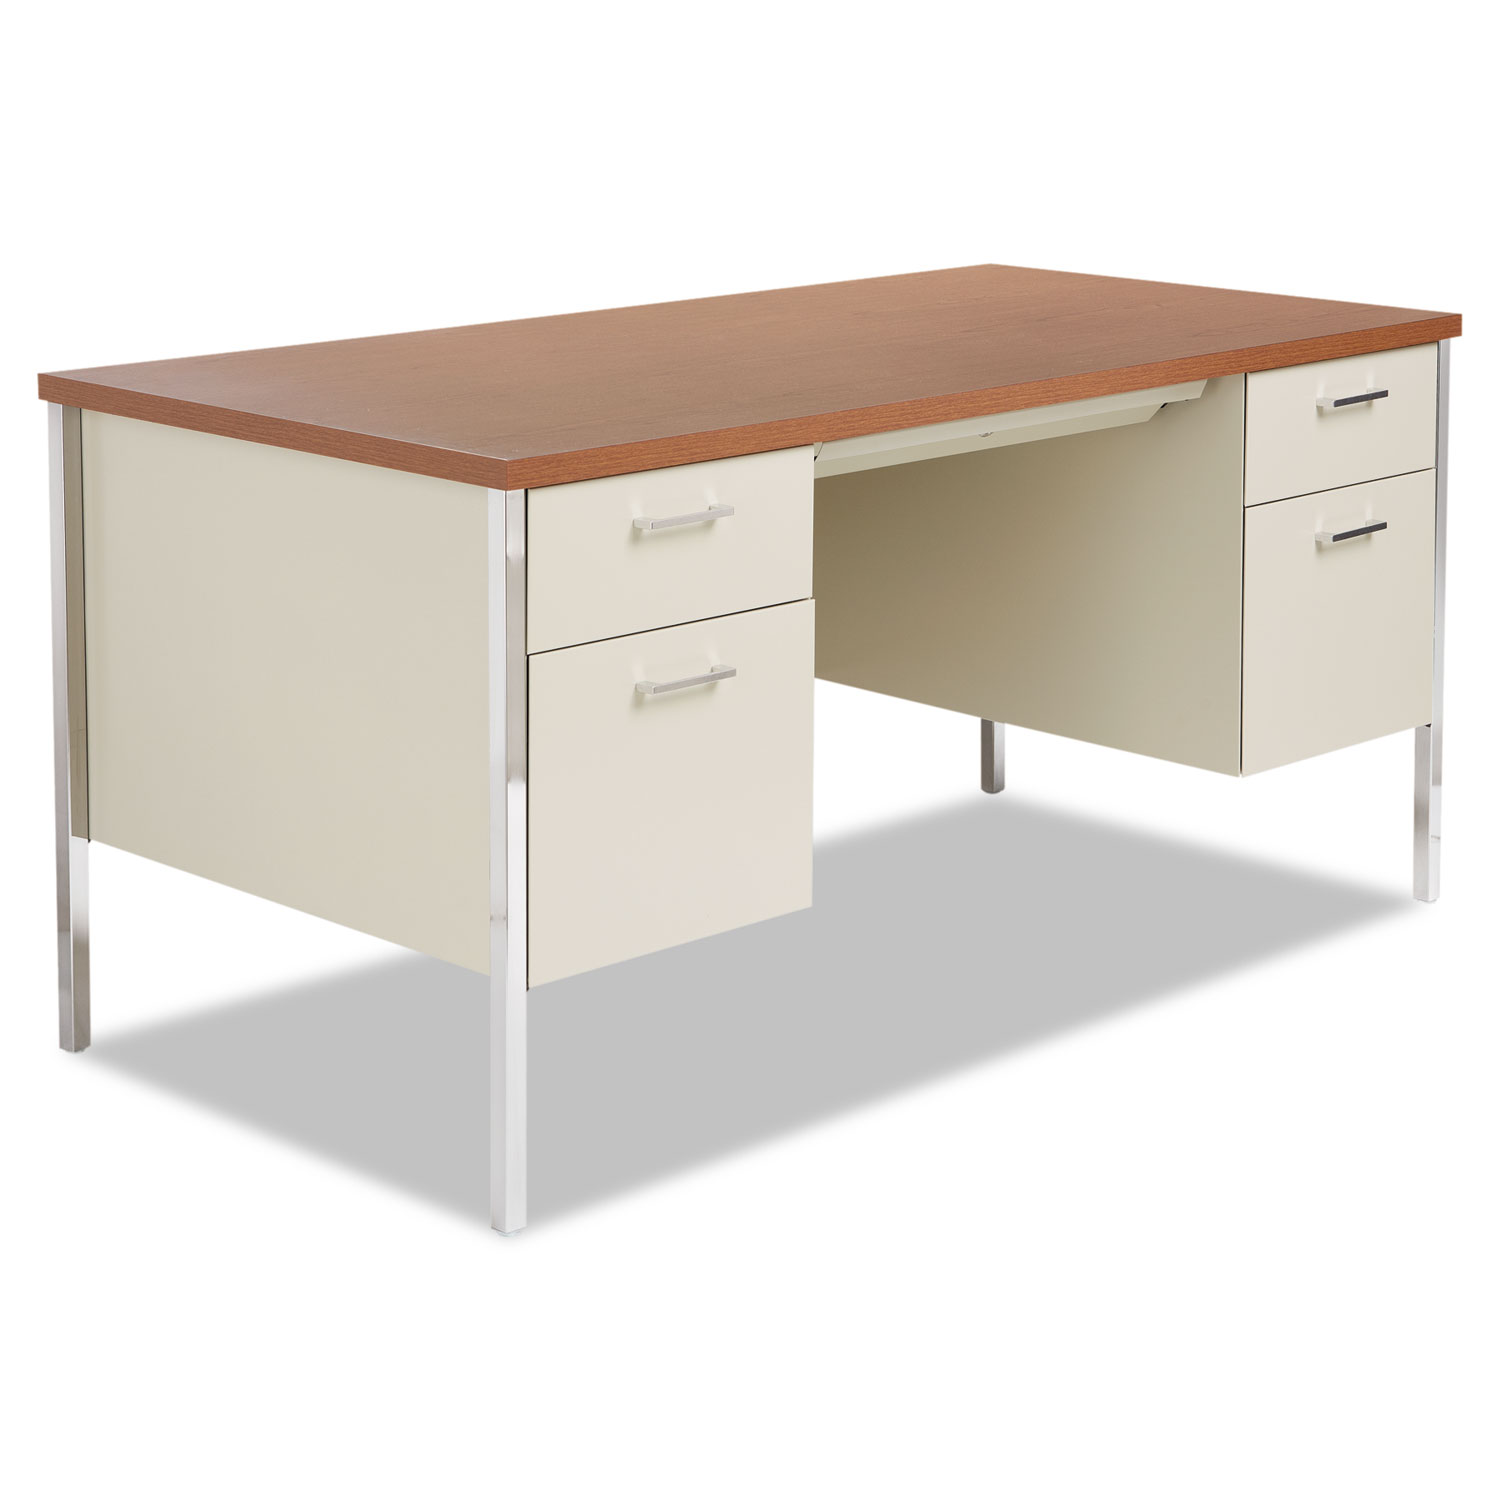  Alera ALESD6030PC Double Pedestal Steel Desk, Metal Desk, 60w x 30d x 29.5h, Cherry/Putty (ALESD6030PC) 